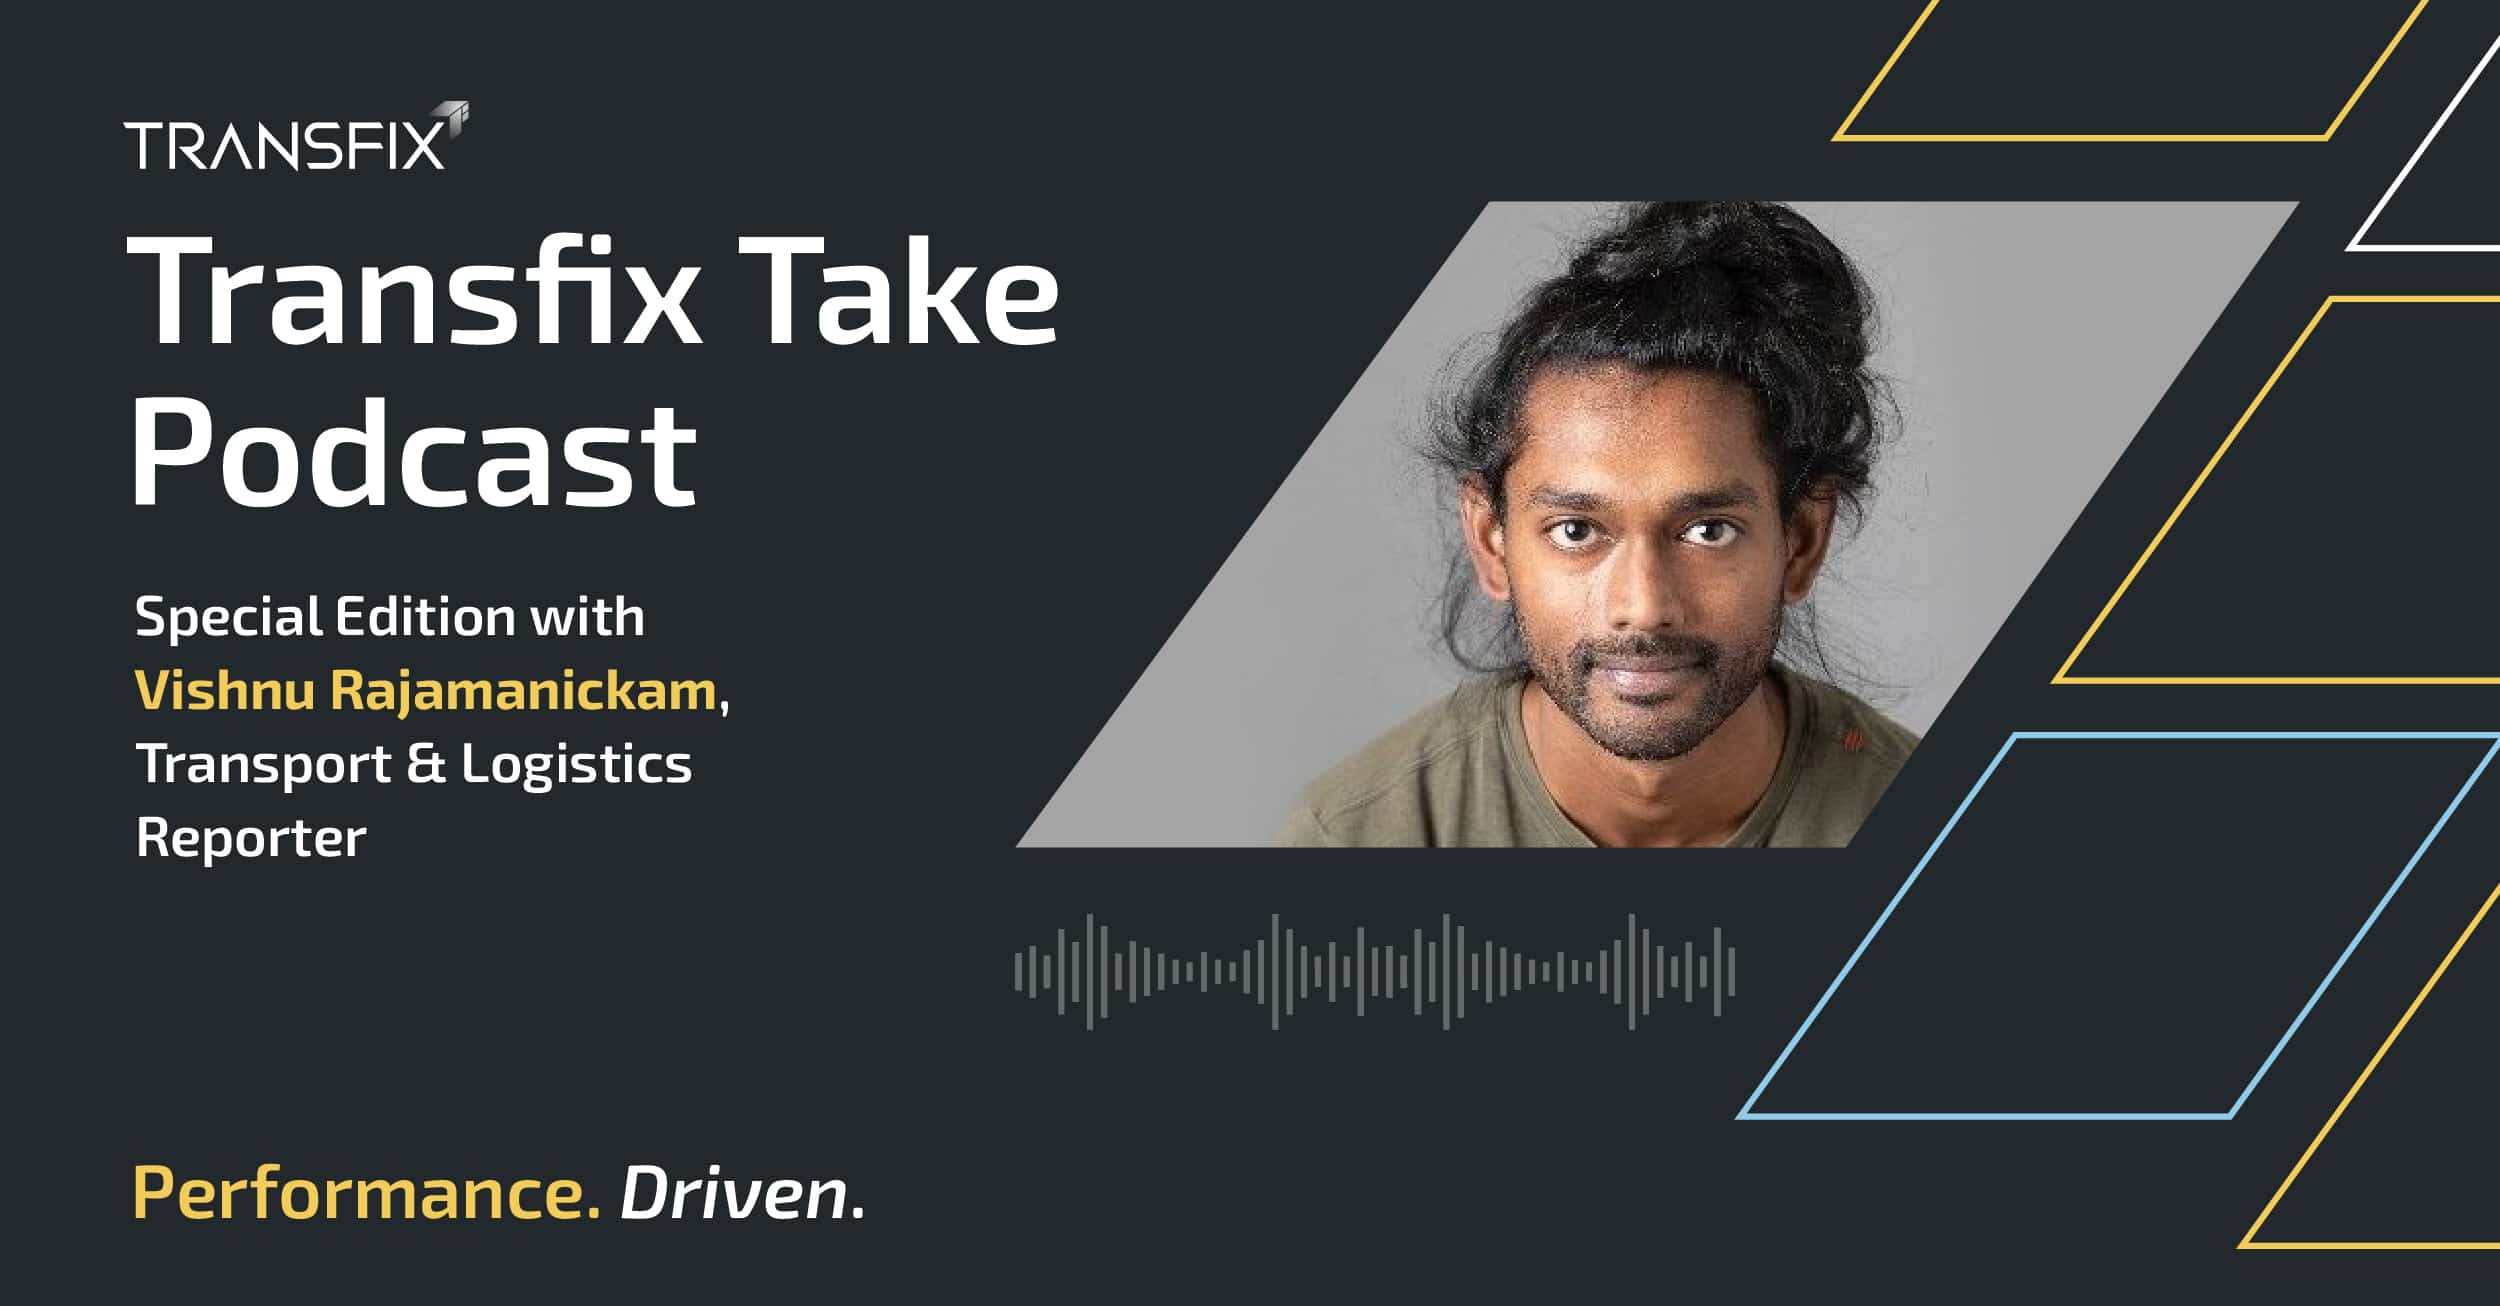 Vishnu Rajamanickam, Transport and Logistics Reporter, Visits the Transfix Take Podcast